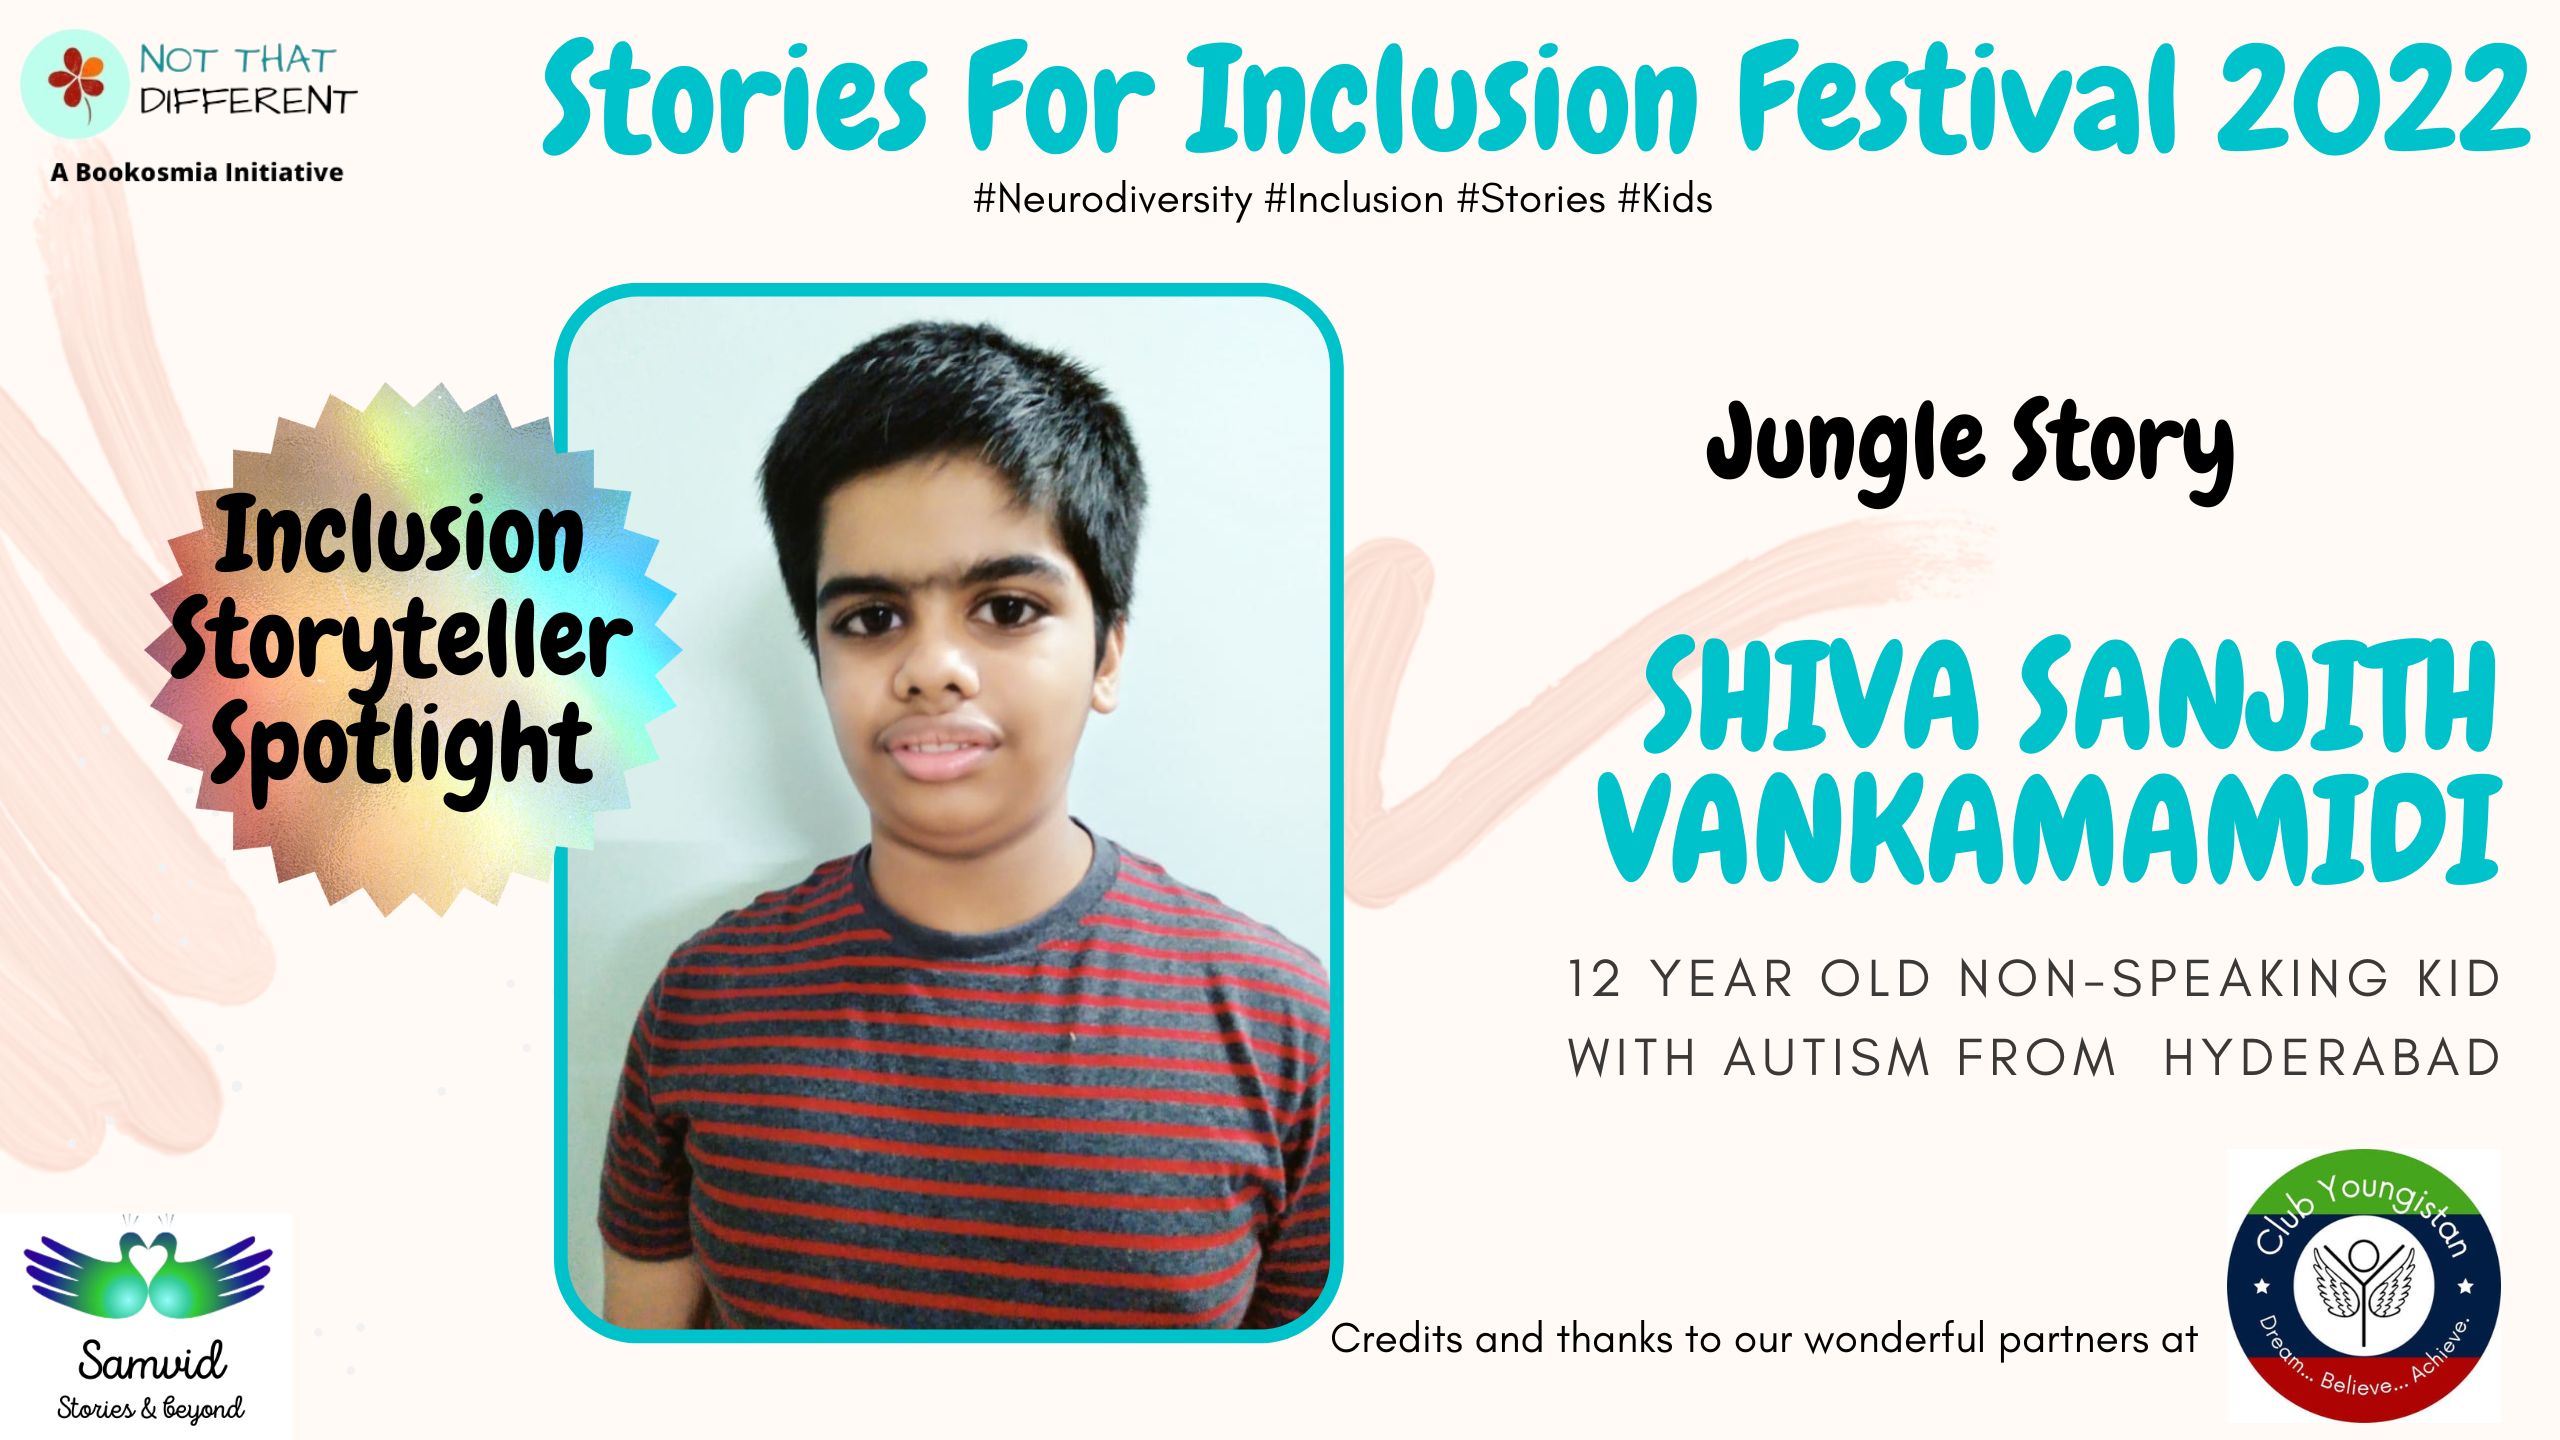 12 year old Shiva Sanjith Vankamamidi, non-speaking child with autism-Inclusion Fest Storyteller Spotight